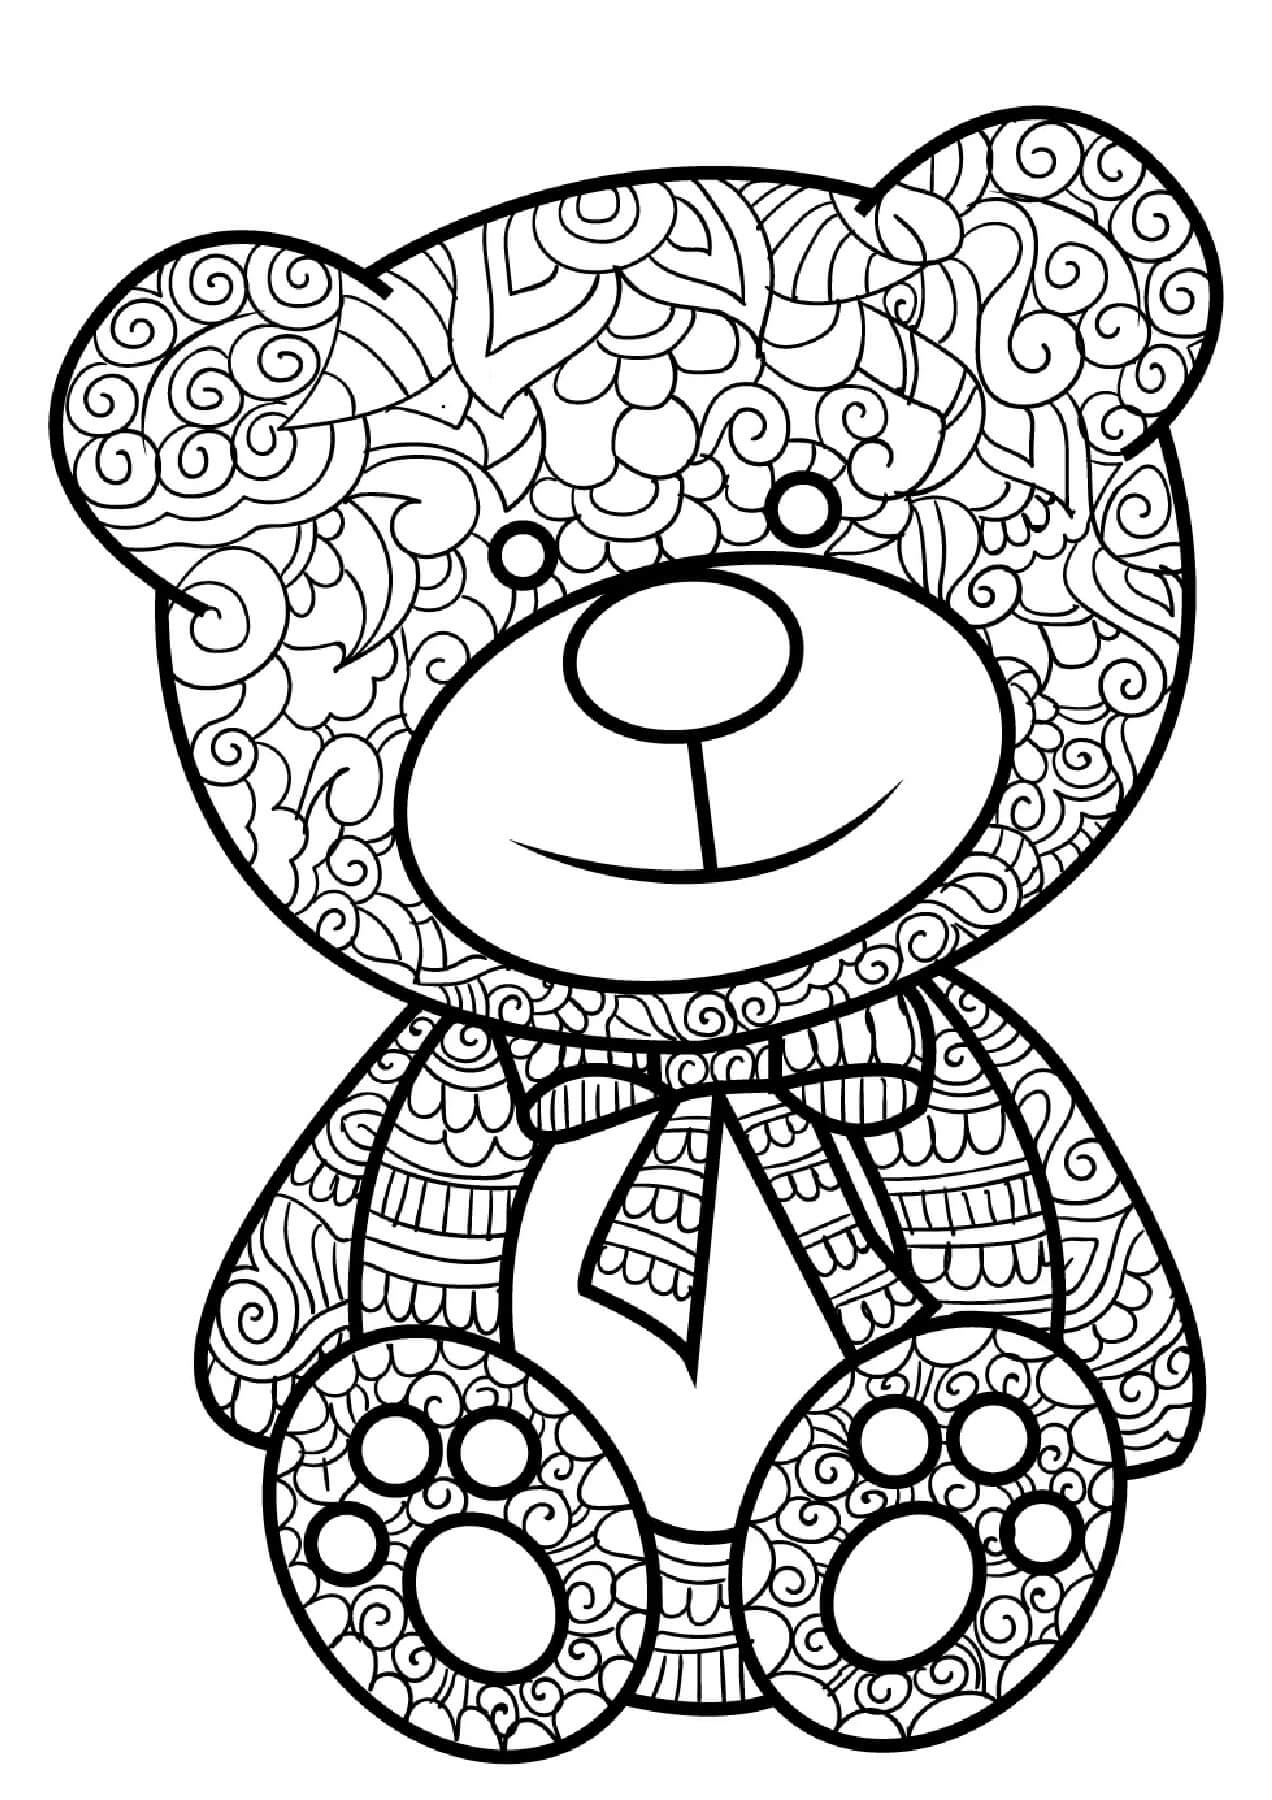 How to draw a simple teddy bear - YouTube